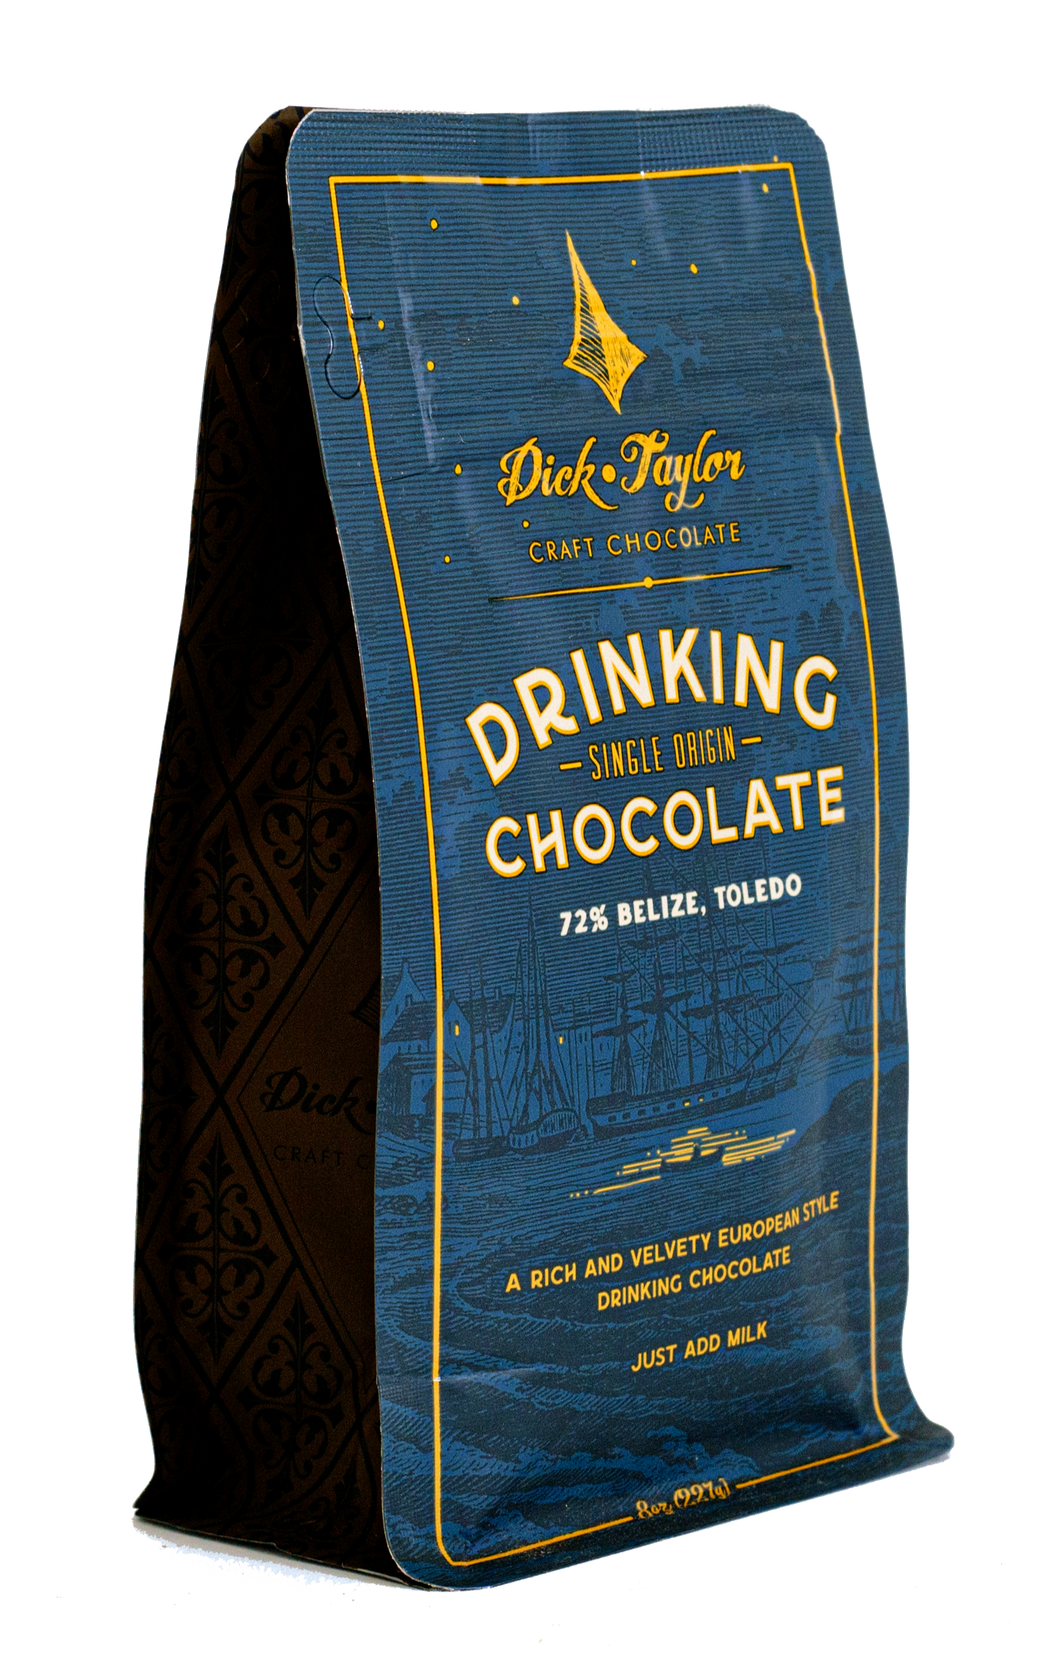 Dick Taylor Single Origin Drinking Chocolate, 72% Belize, Toledo